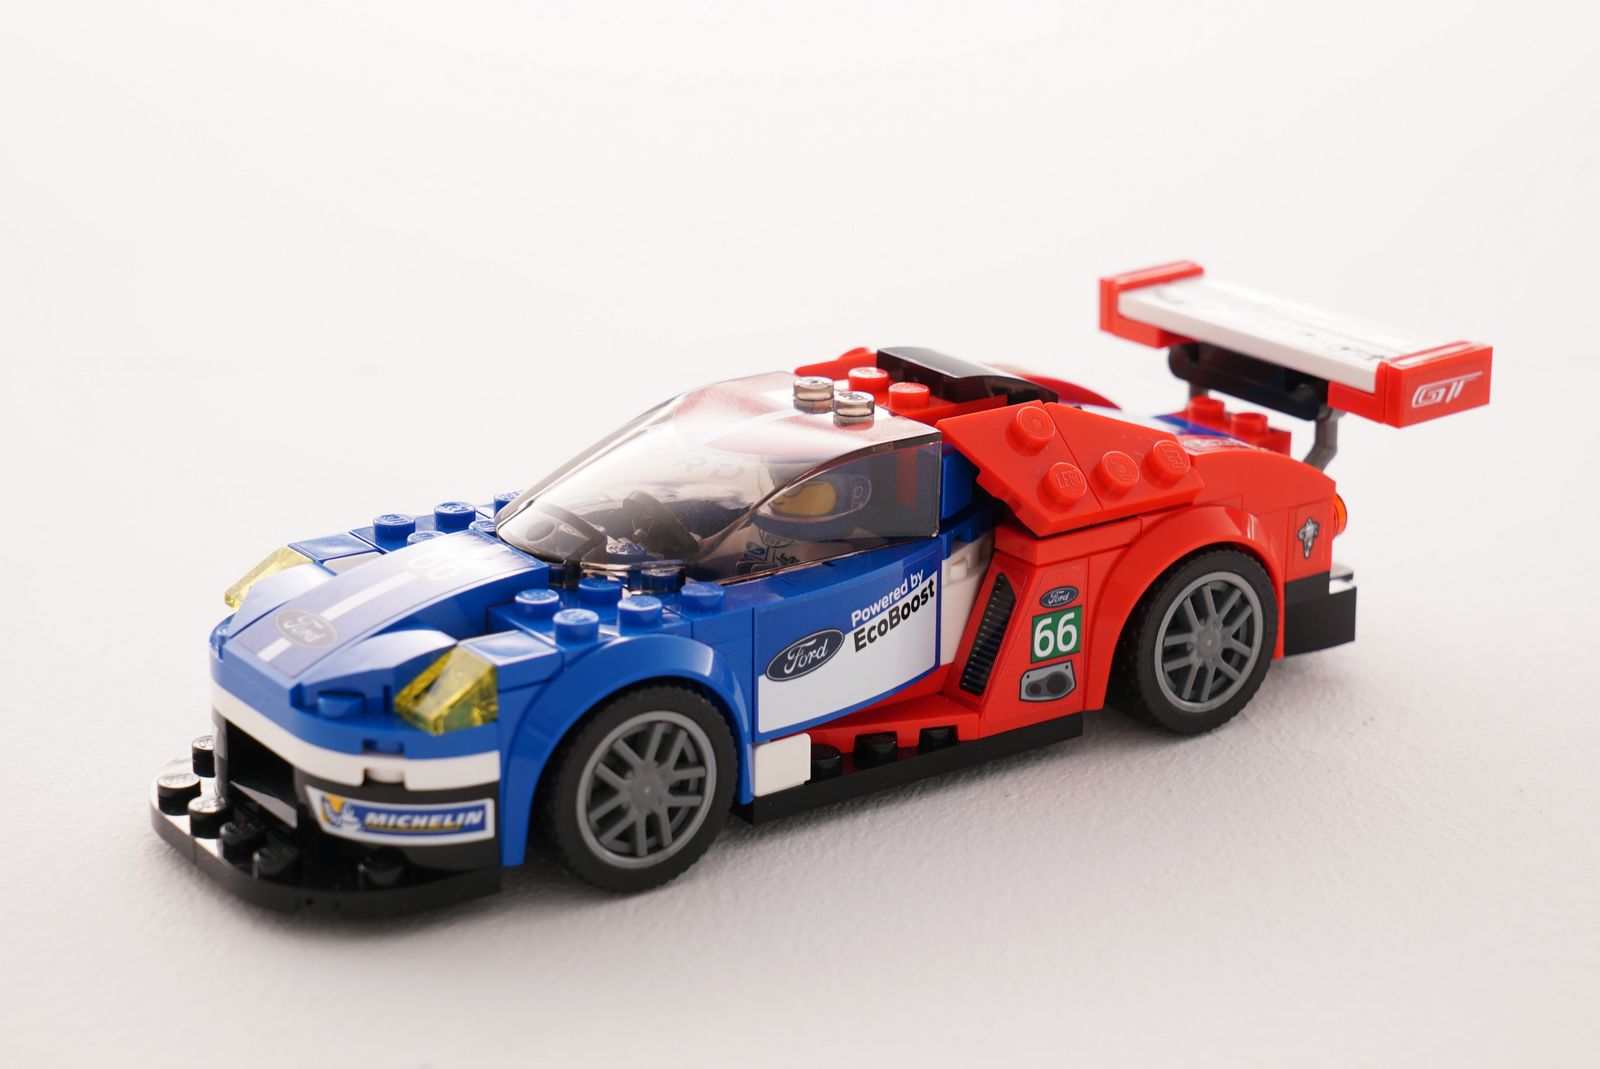 Ford GT i GT40 od LEGO